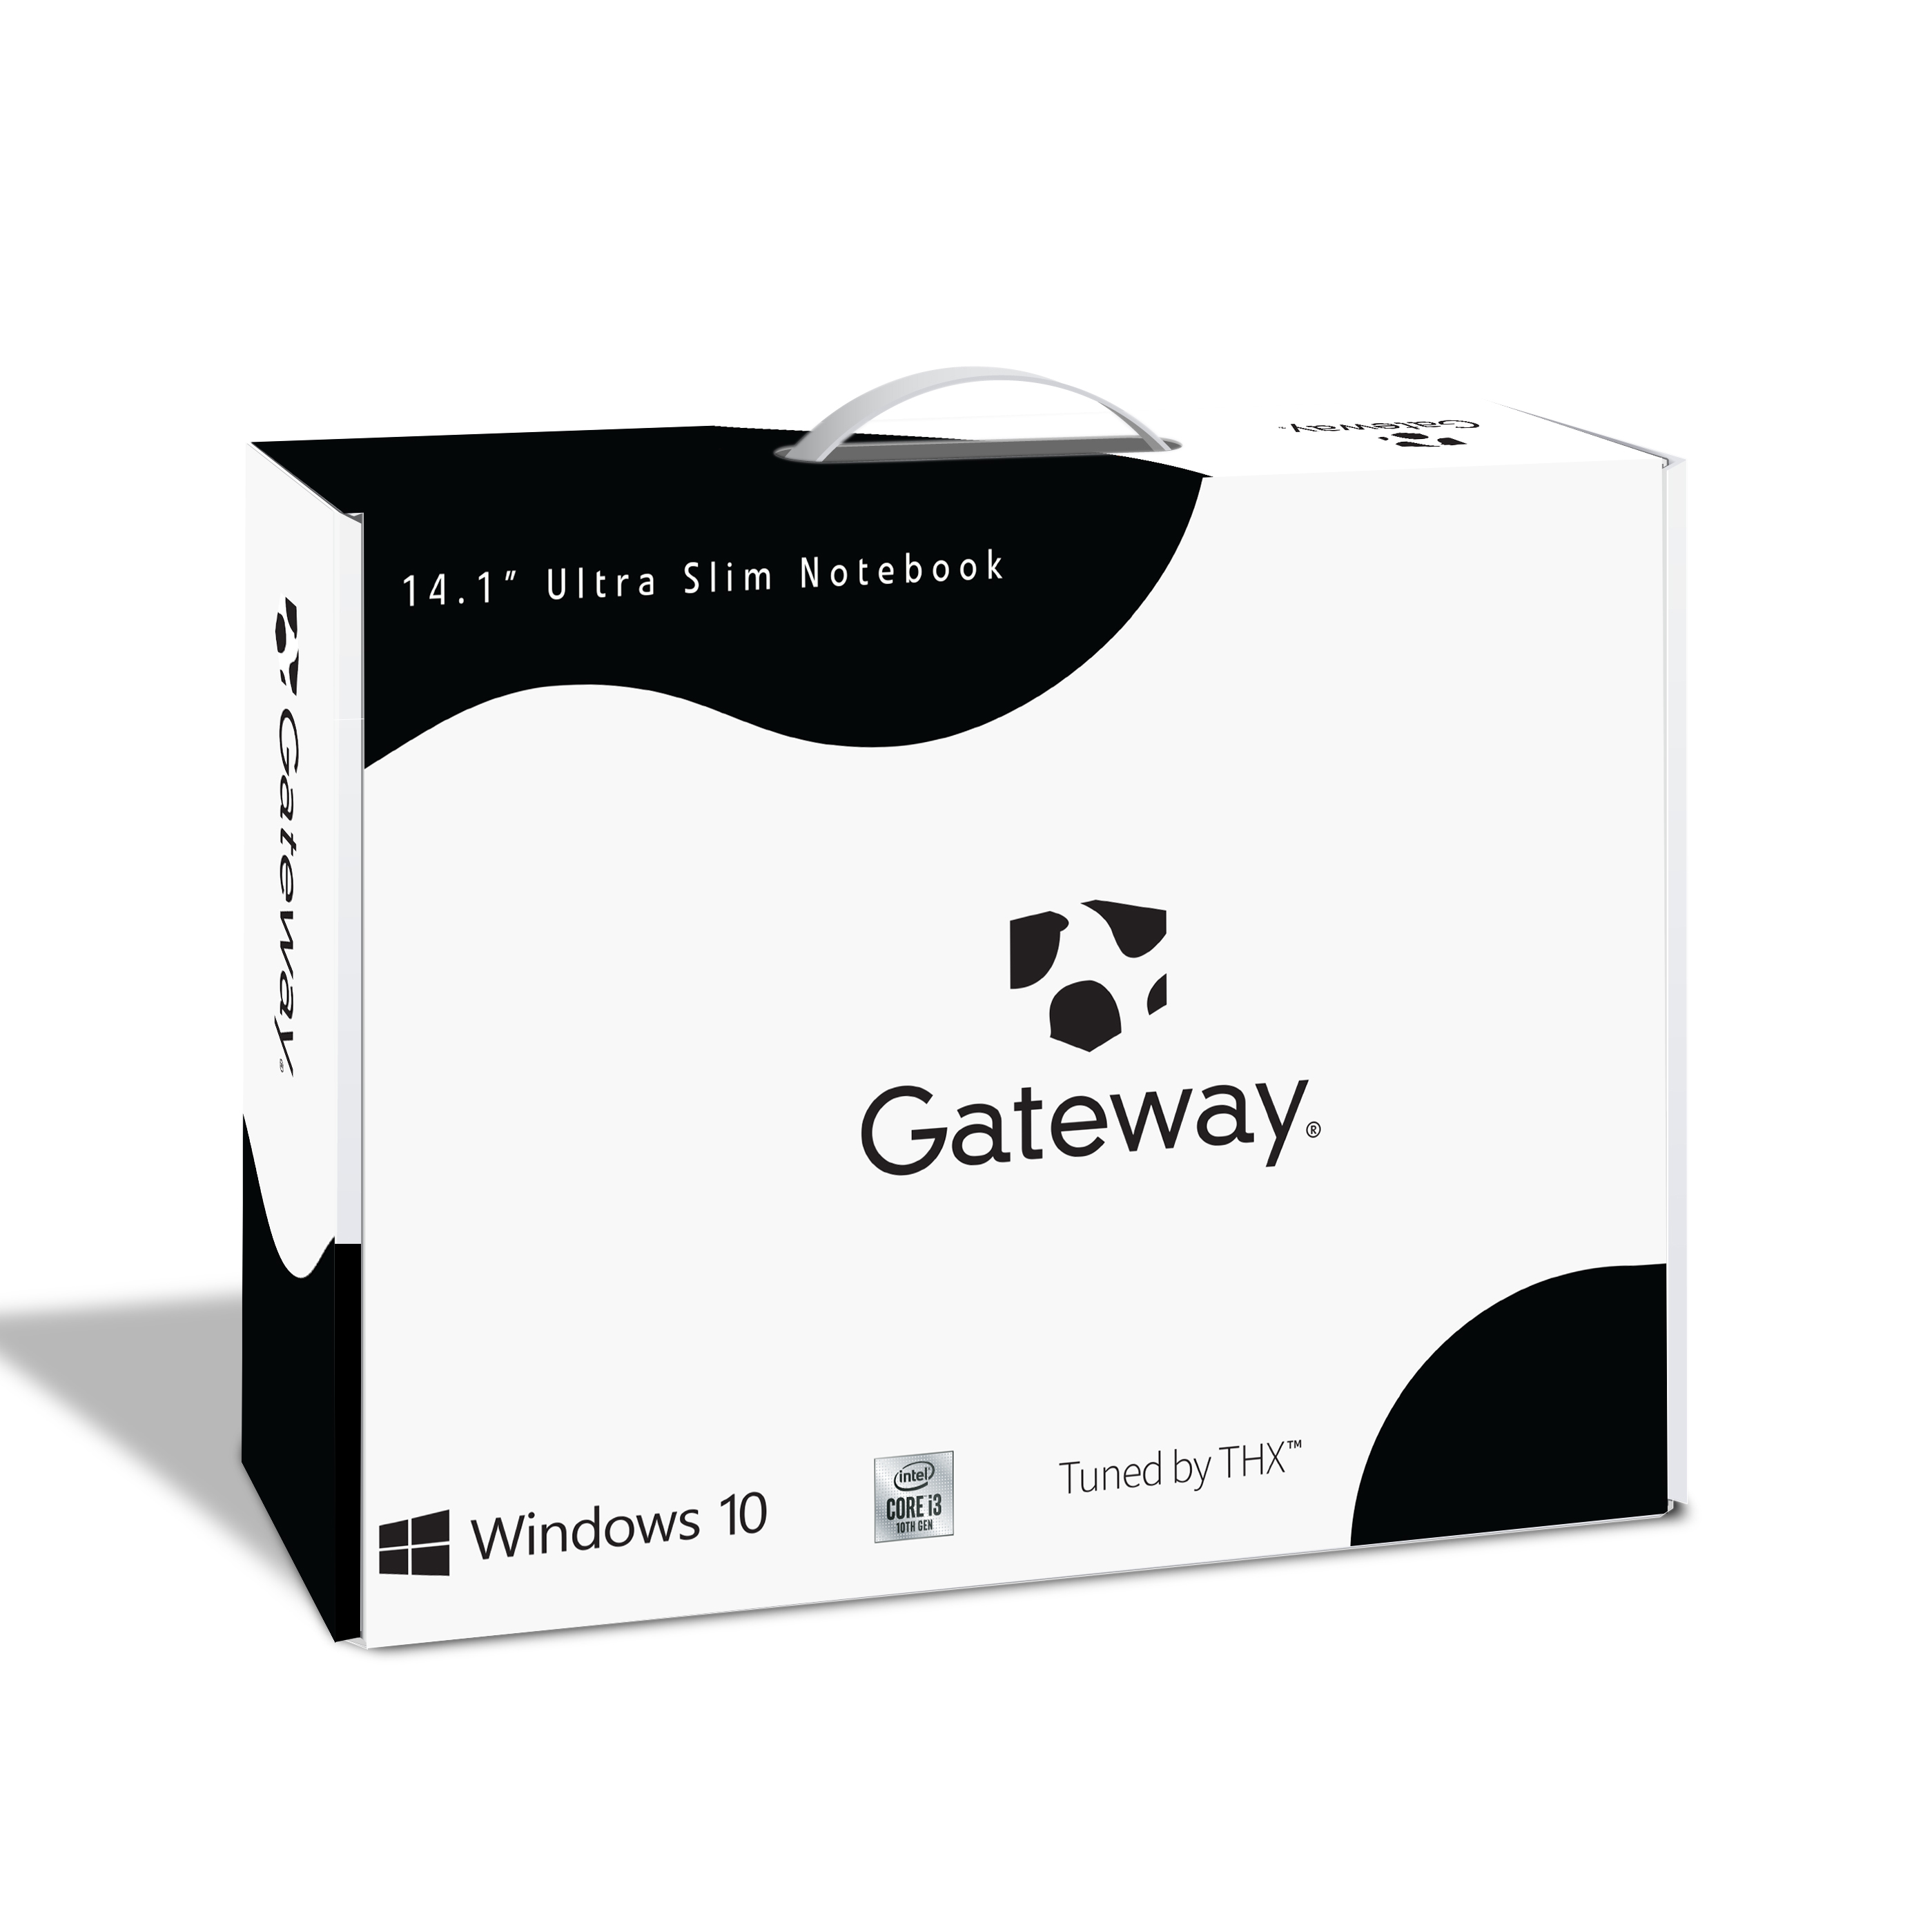 Gateway 14.1" FHD Ultra Slim Notebook, Intel Core i3-1005G1, 4GB RAM, 128GB SSD, Tuned by THX™ Audio, Fingerprint Scanner, Webcam, HDMI, Cortana, Windows 10 S, Google Classroom Compatible - image 5 of 9